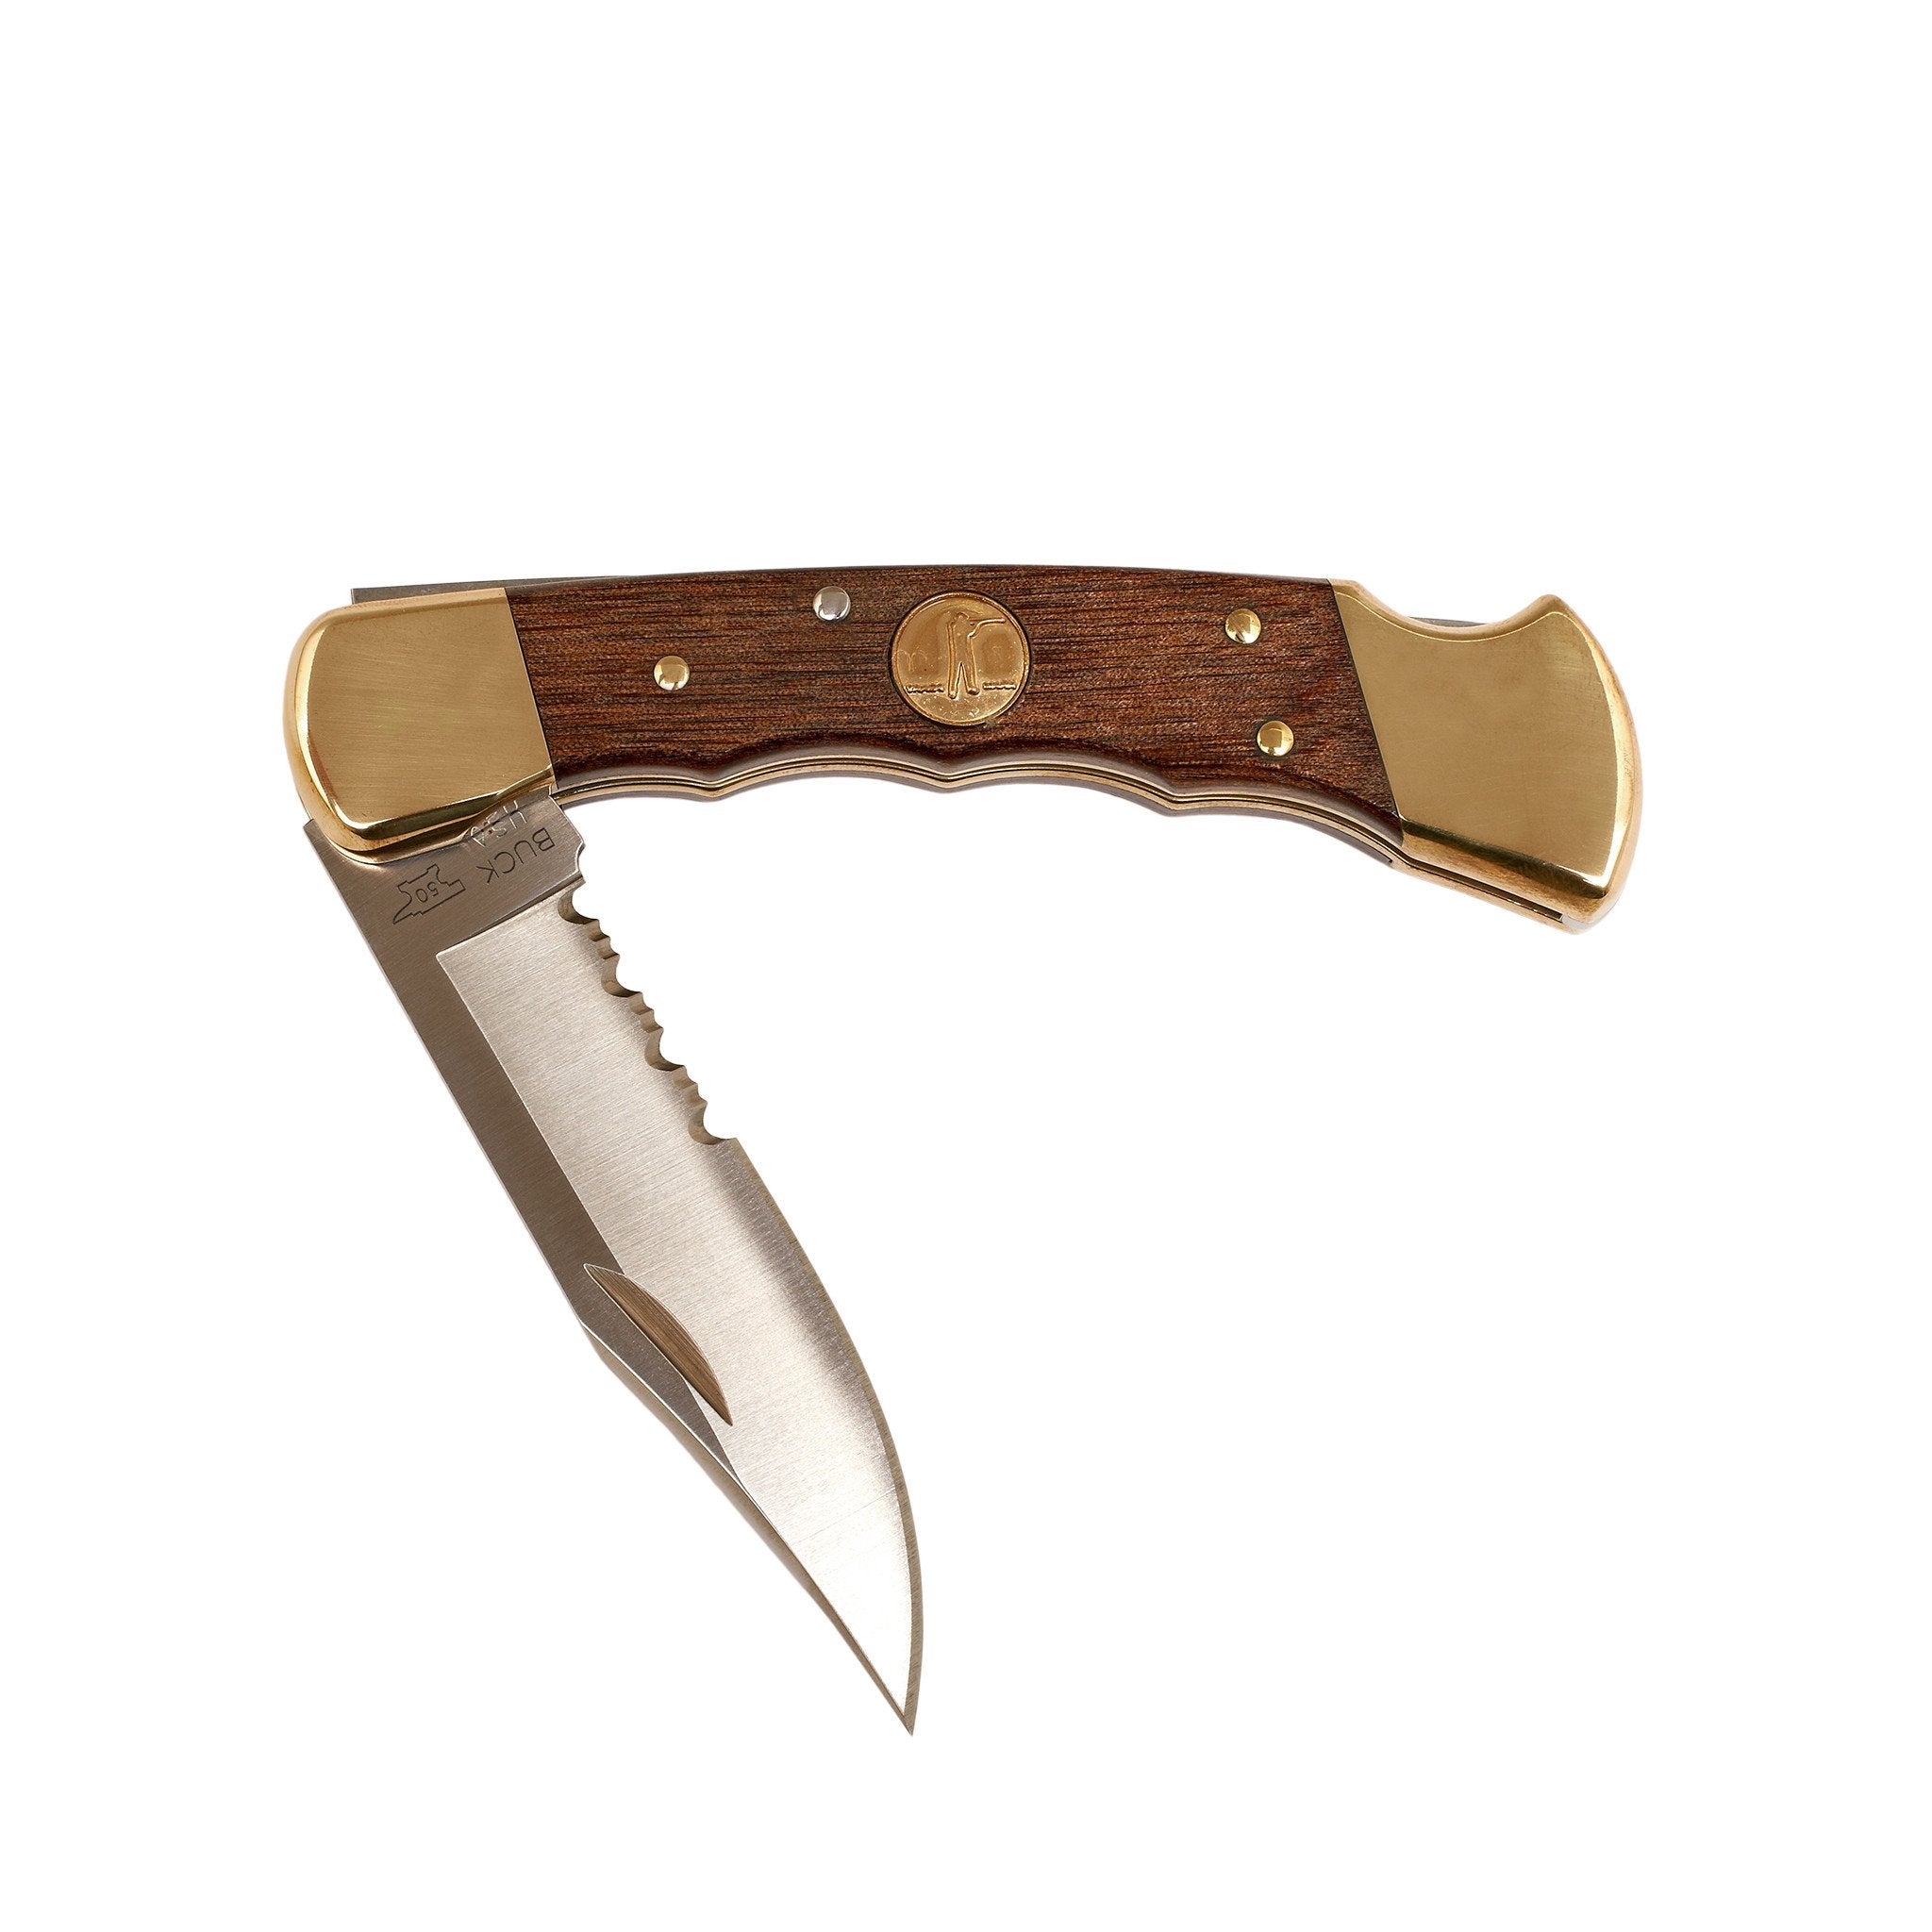 The Folding Hunter Knife, Heritage Walnut